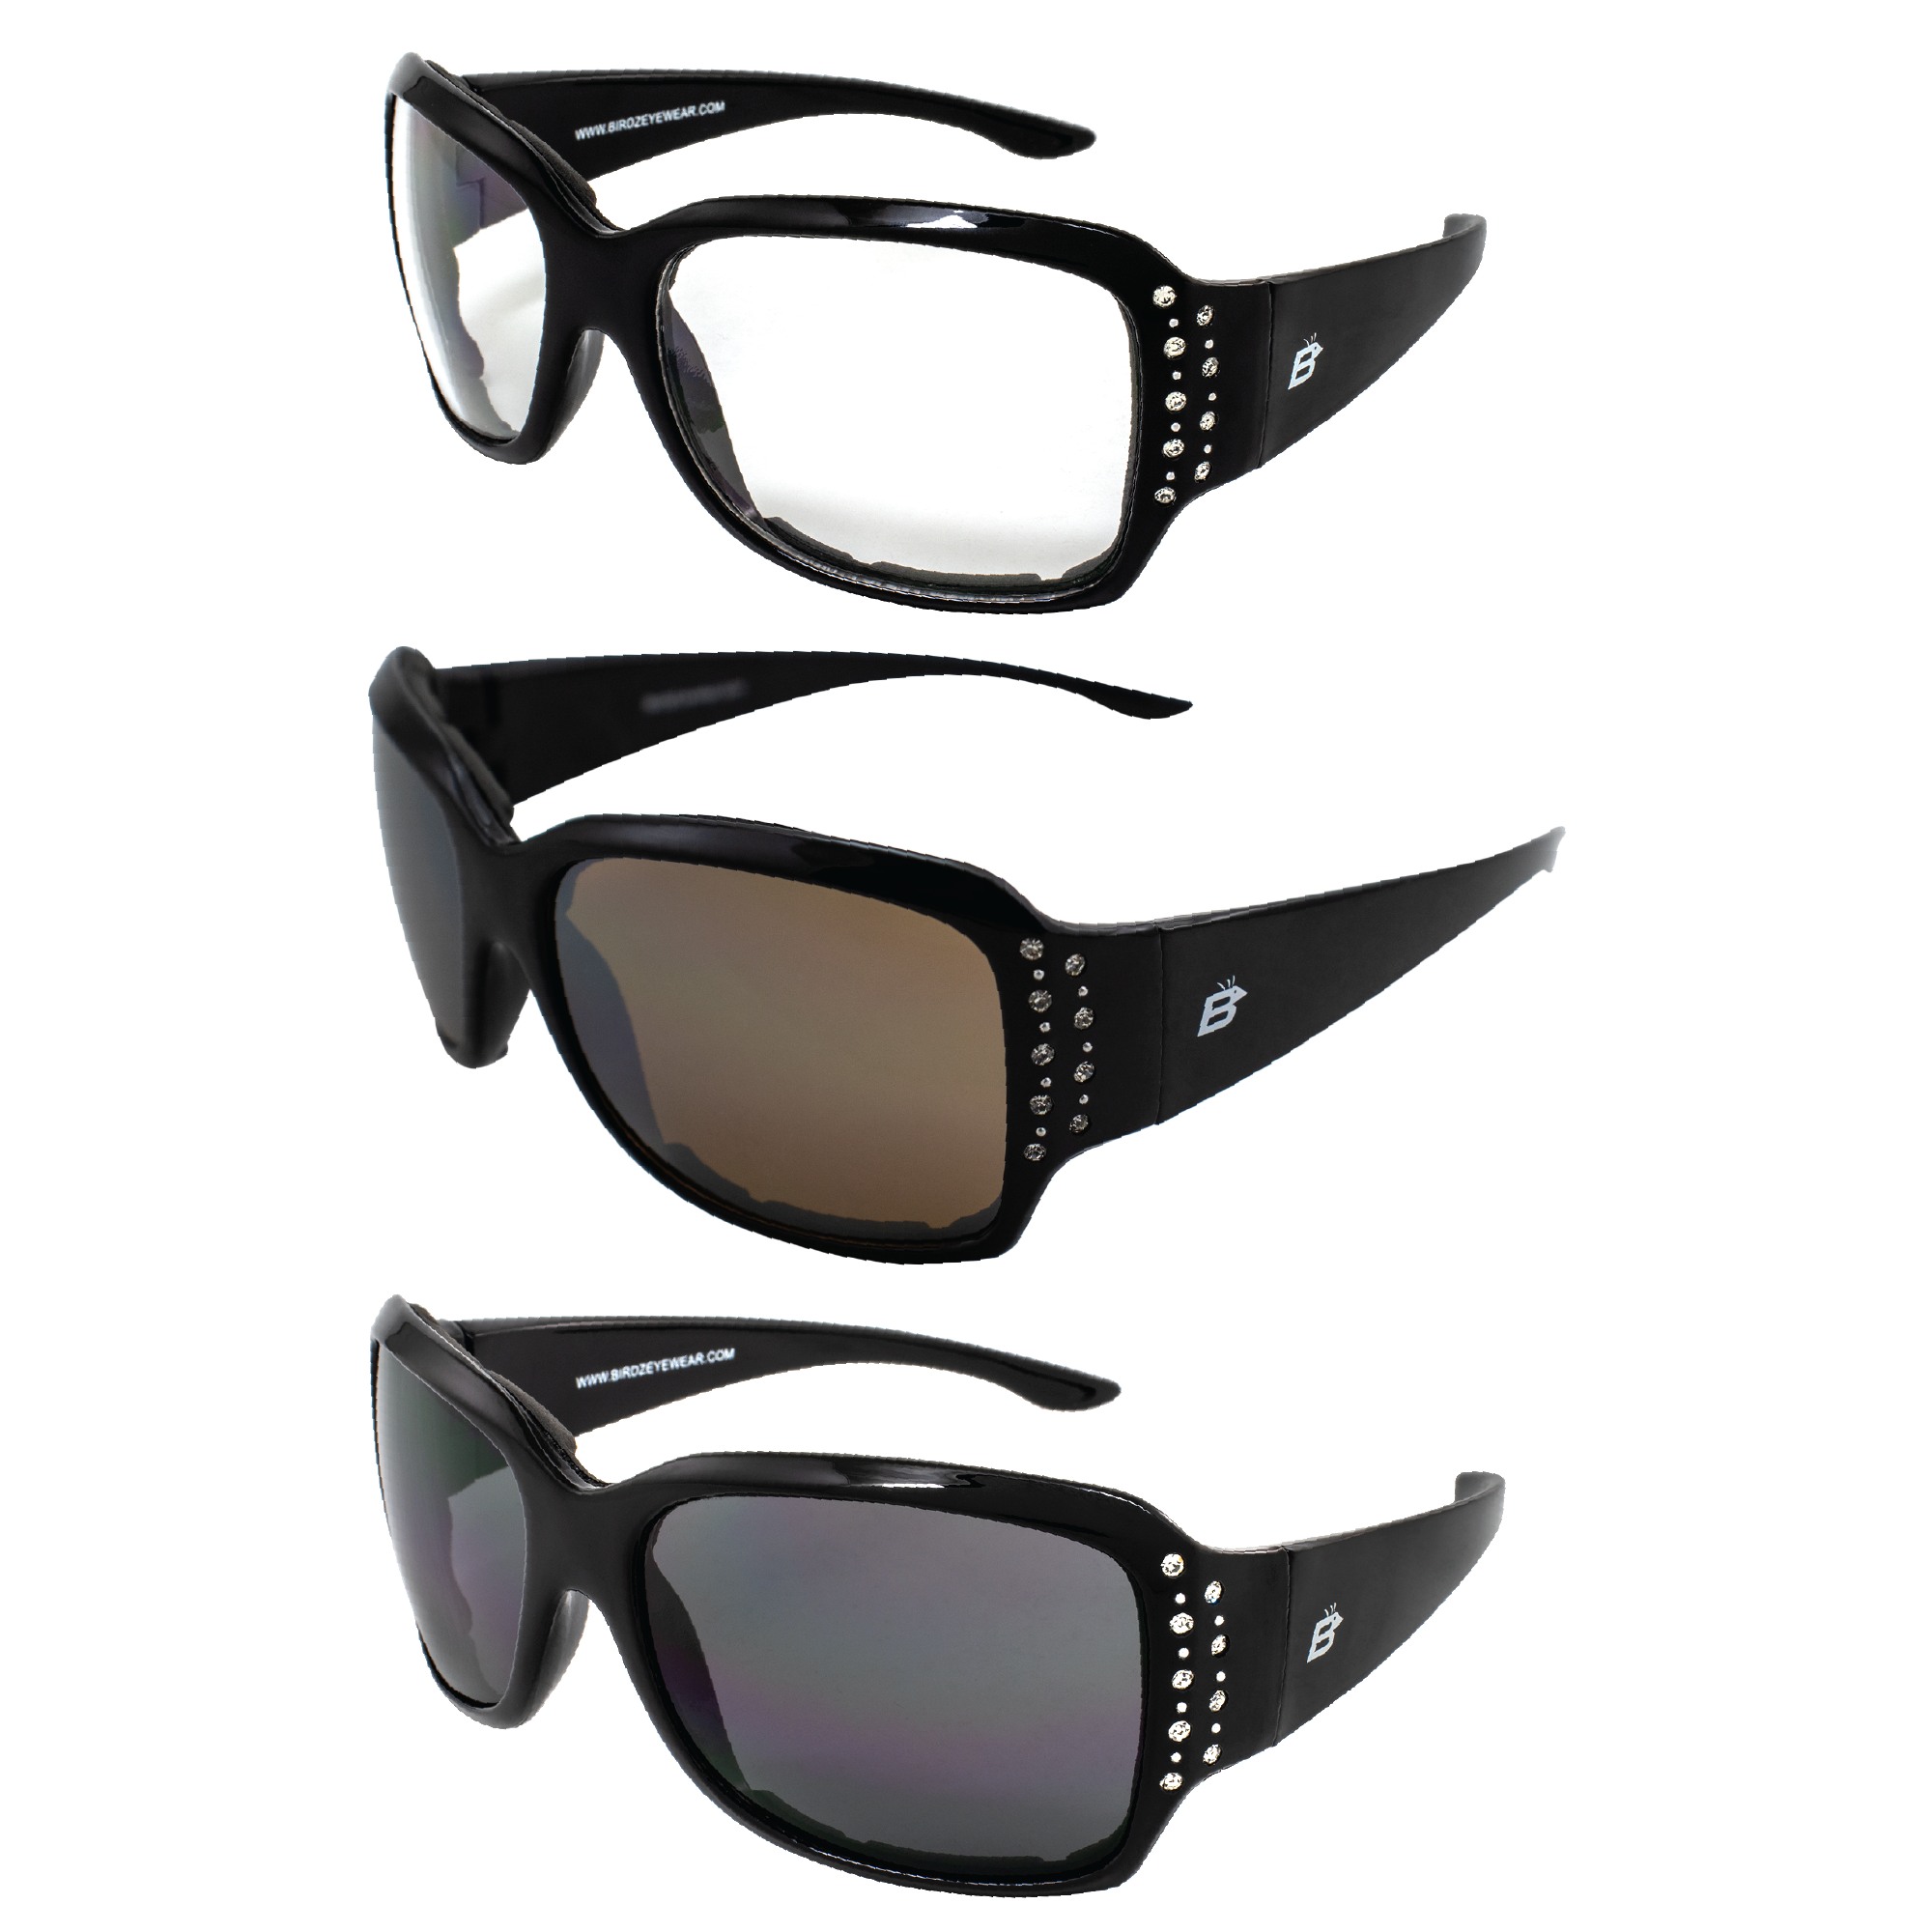 Birdz Eyewear LadyBird Padded Motorcycle Sunglasses Glasses for Women Bling Rhinestone Accents 3 Pairs Black Frame w/Clear Smoke & Driving Mirror Lenses - image 1 of 9